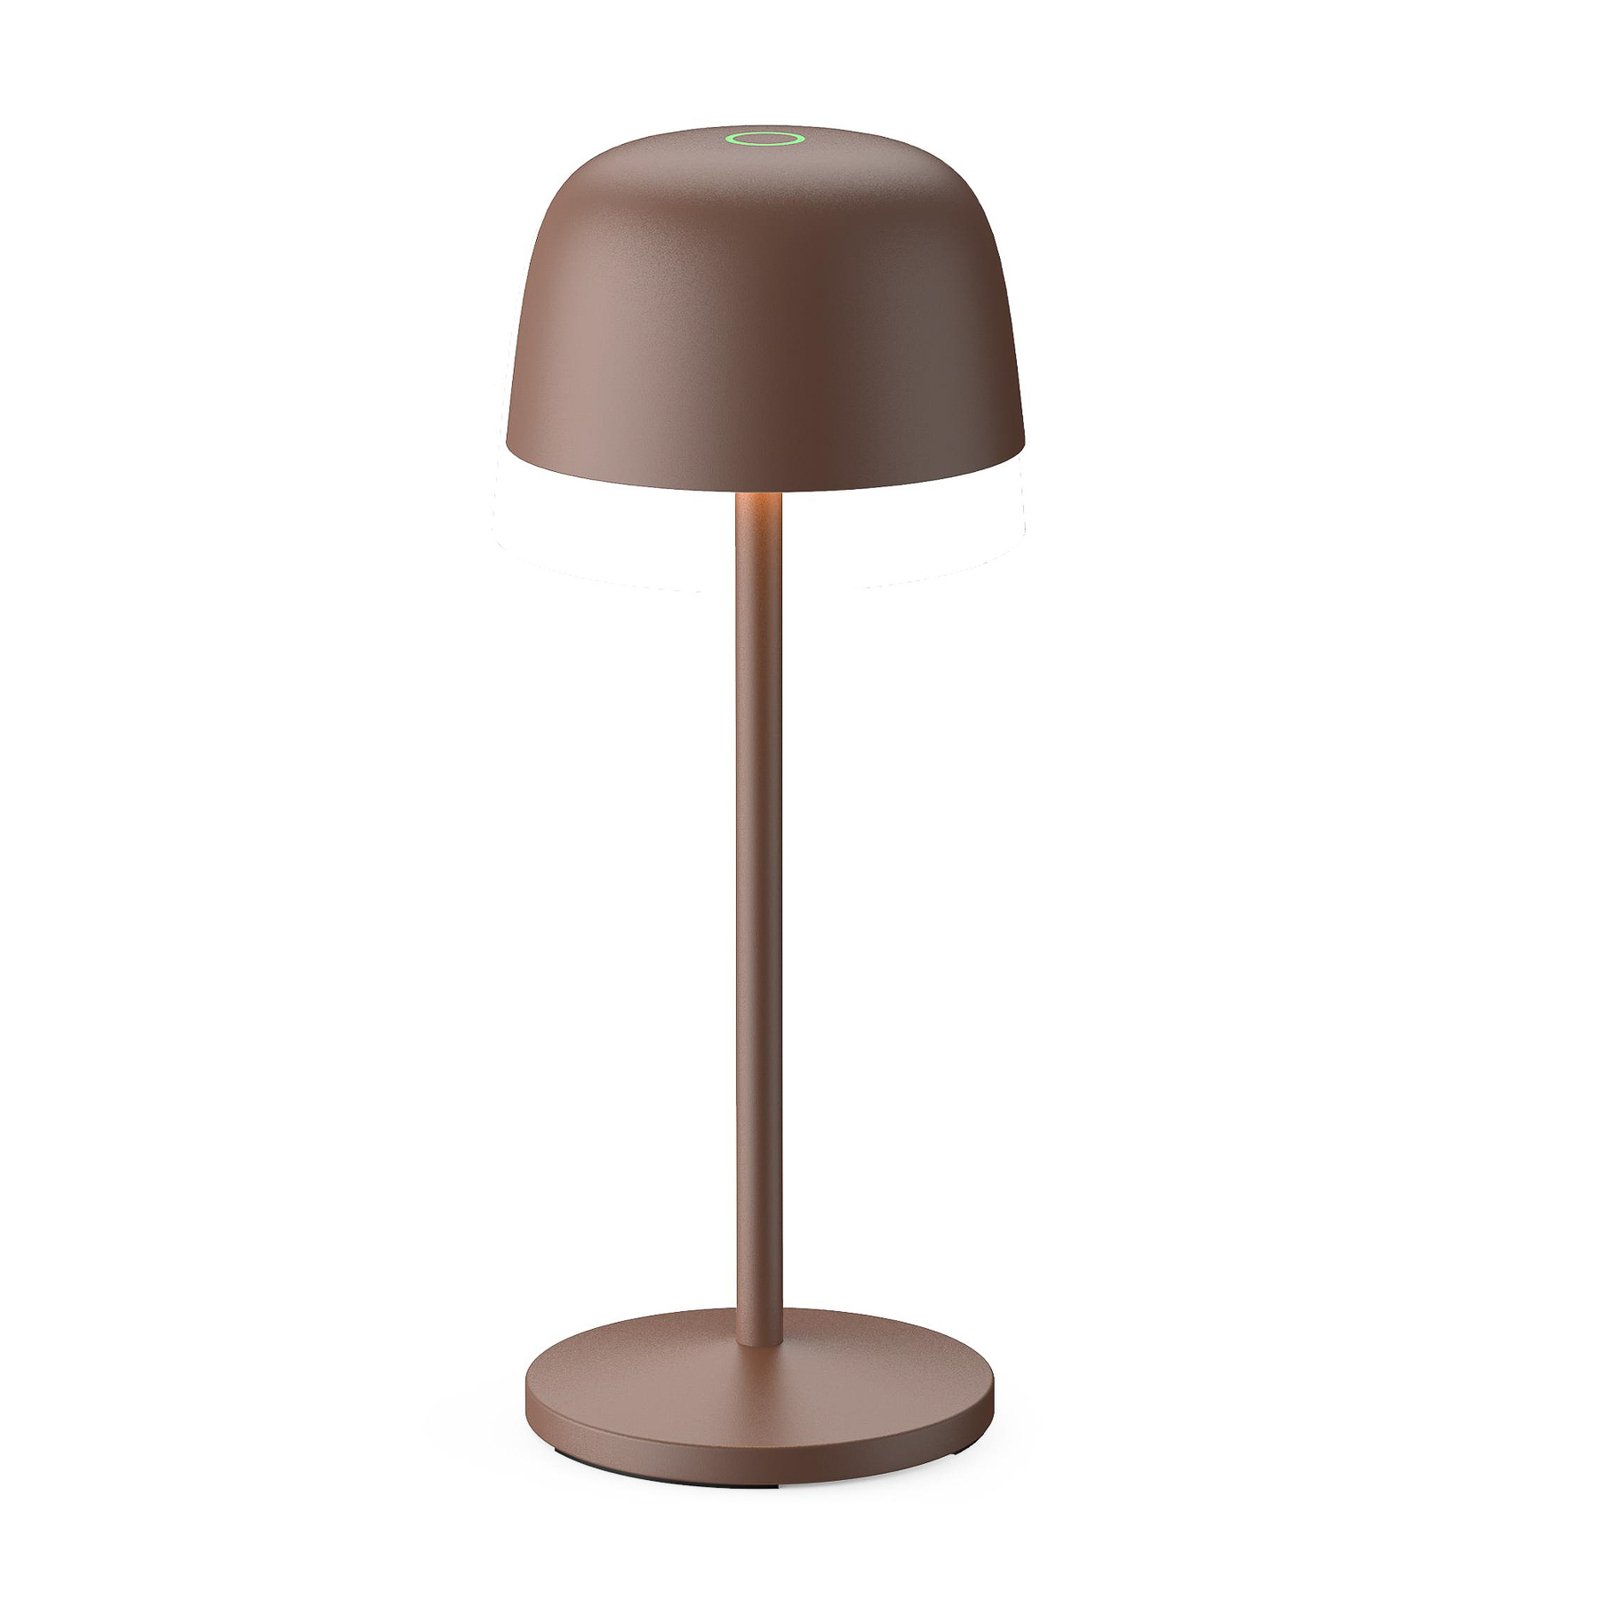 Akumulatorowa lampa stołowa LED Lindby Arietty, rdzawobrązowa, zestaw 3